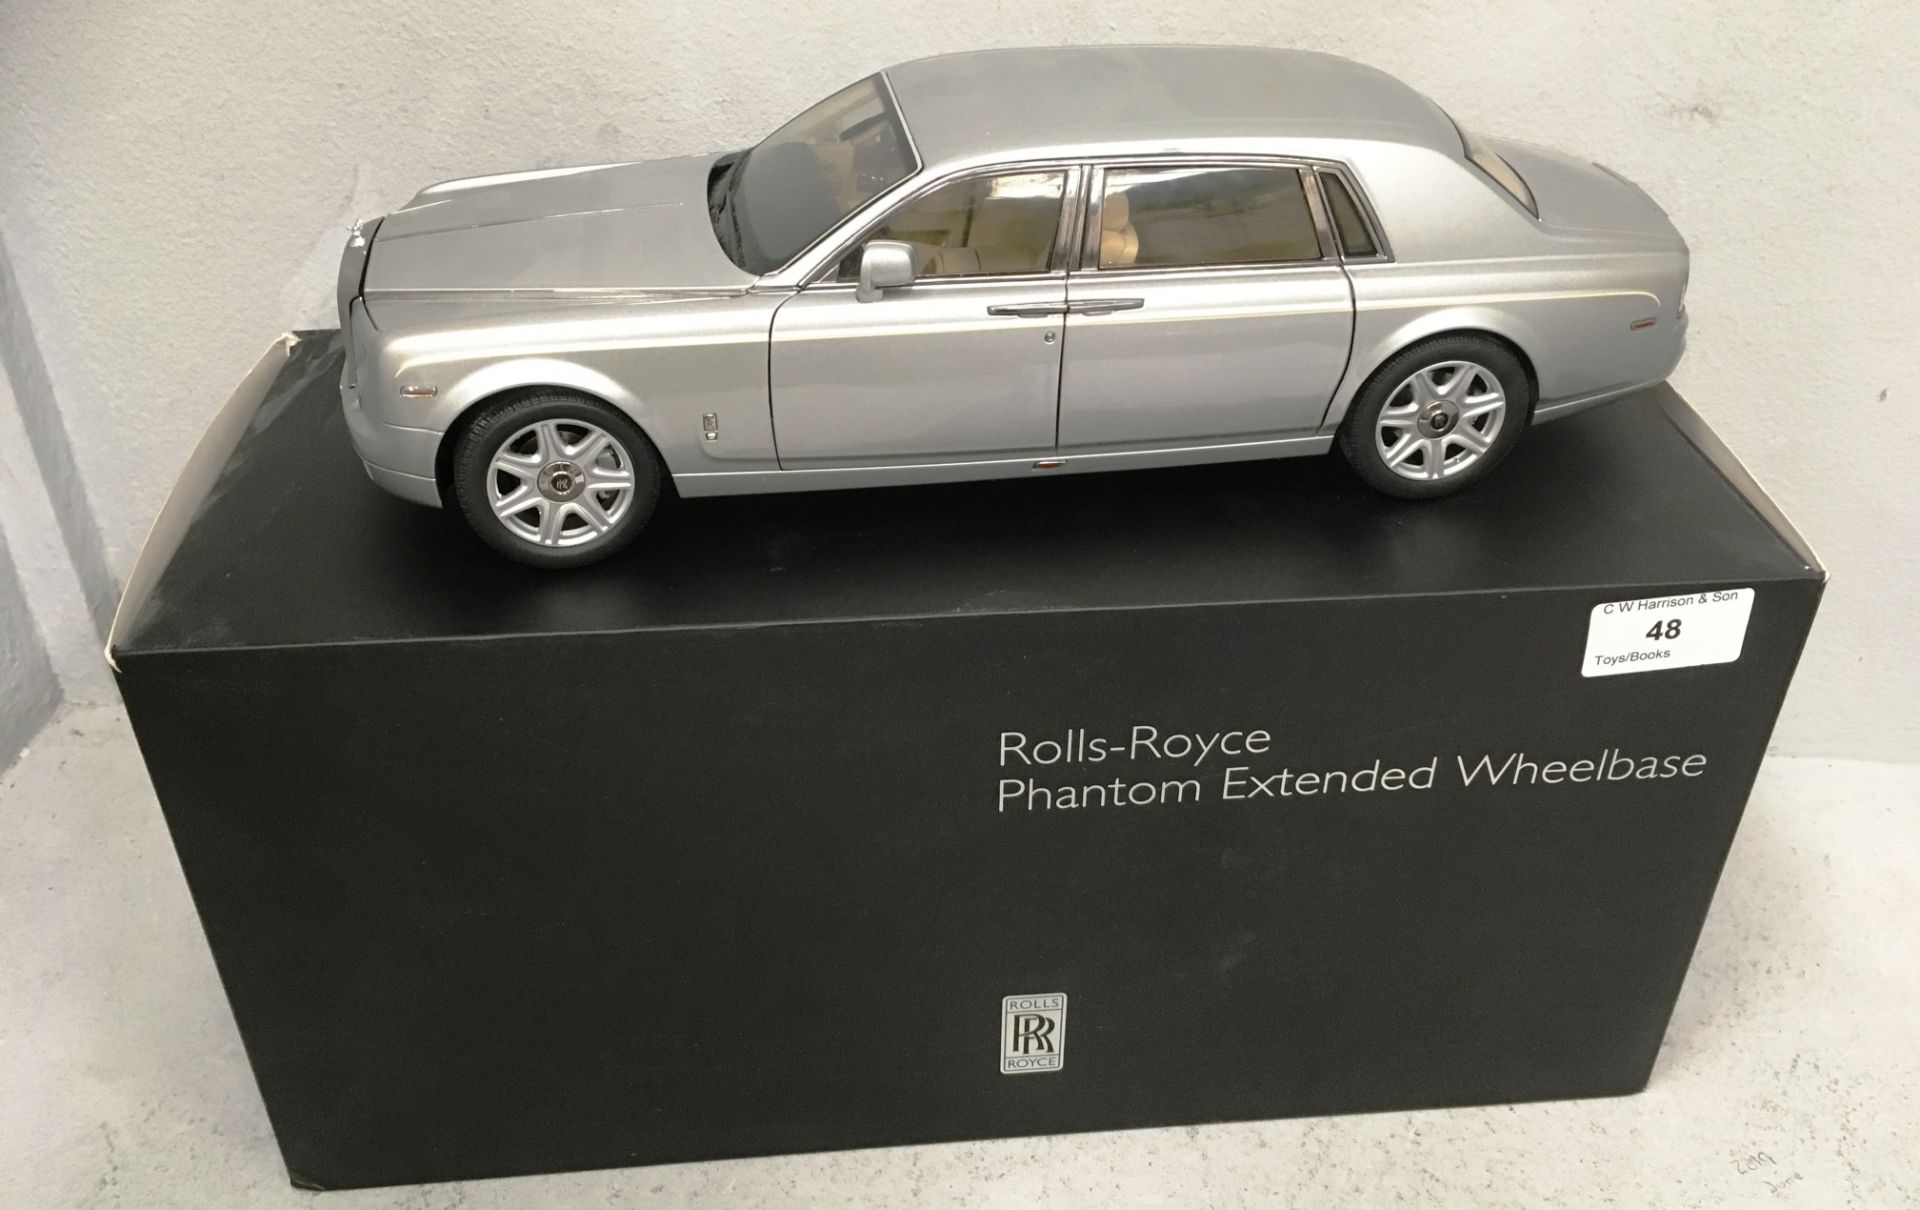 Kyosho 1/18 scale die cast metal model of Rolls Royce Phantom Extended Wheelbase (boxed)